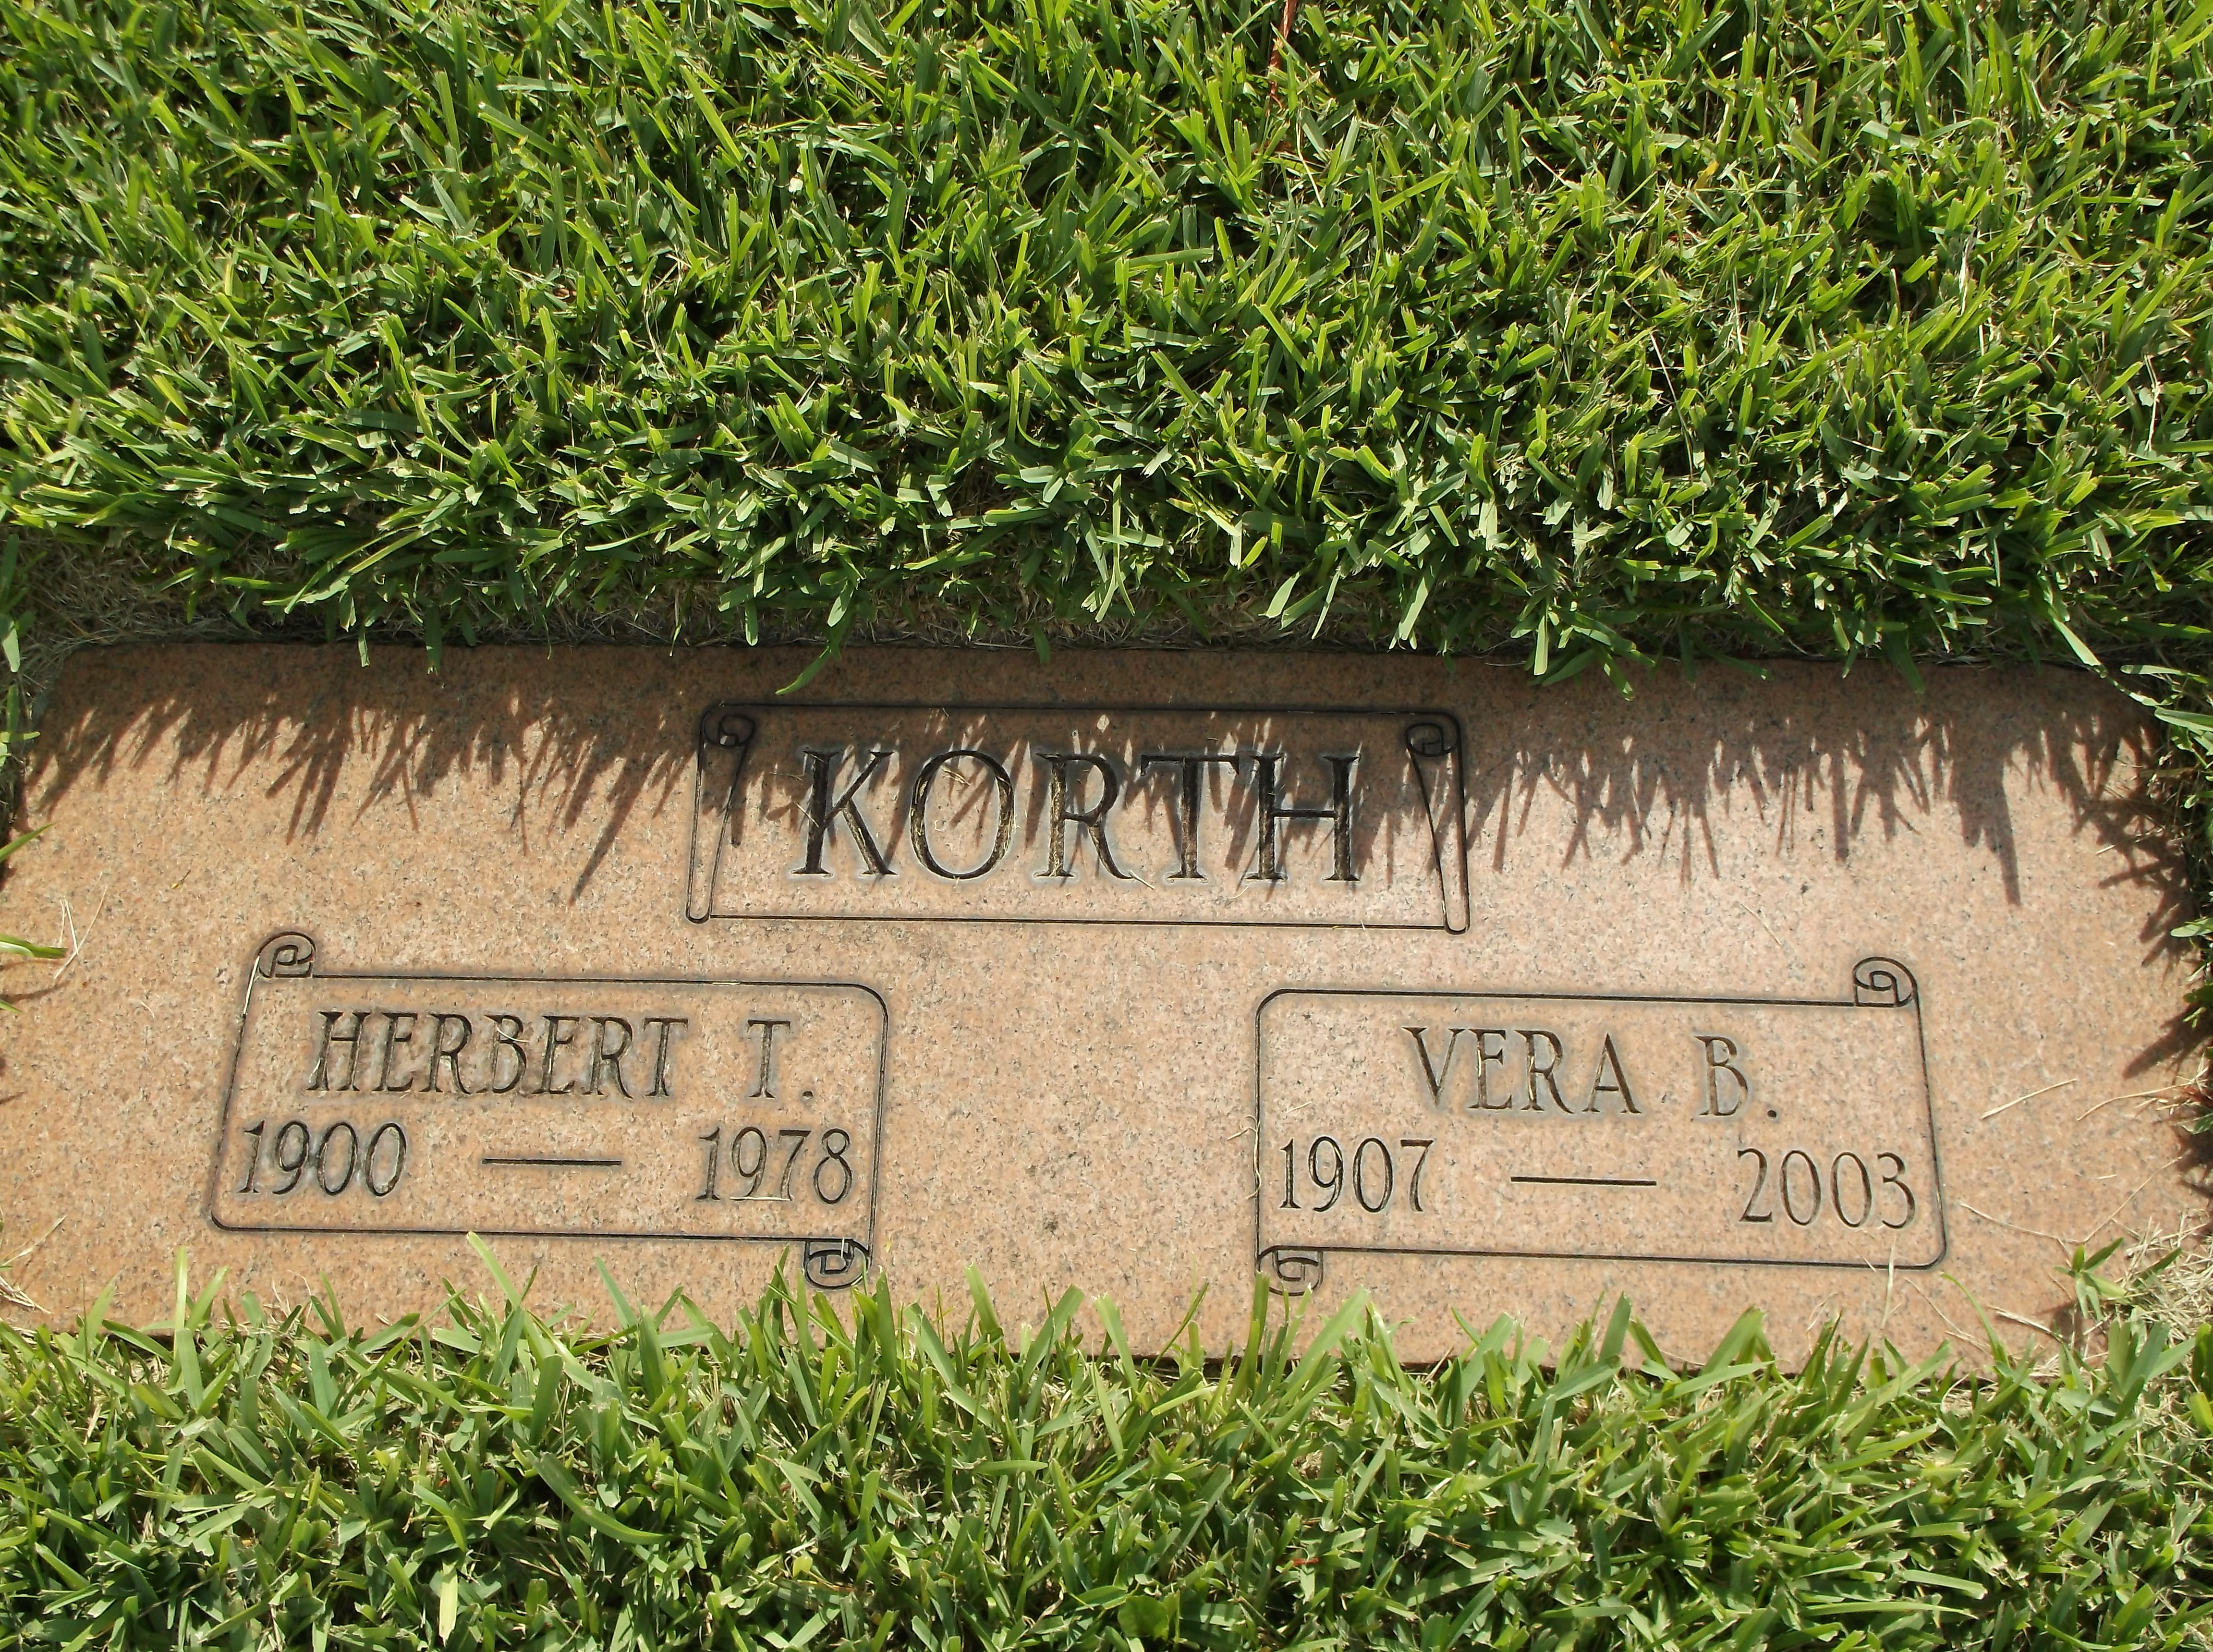 Herbert T Korth